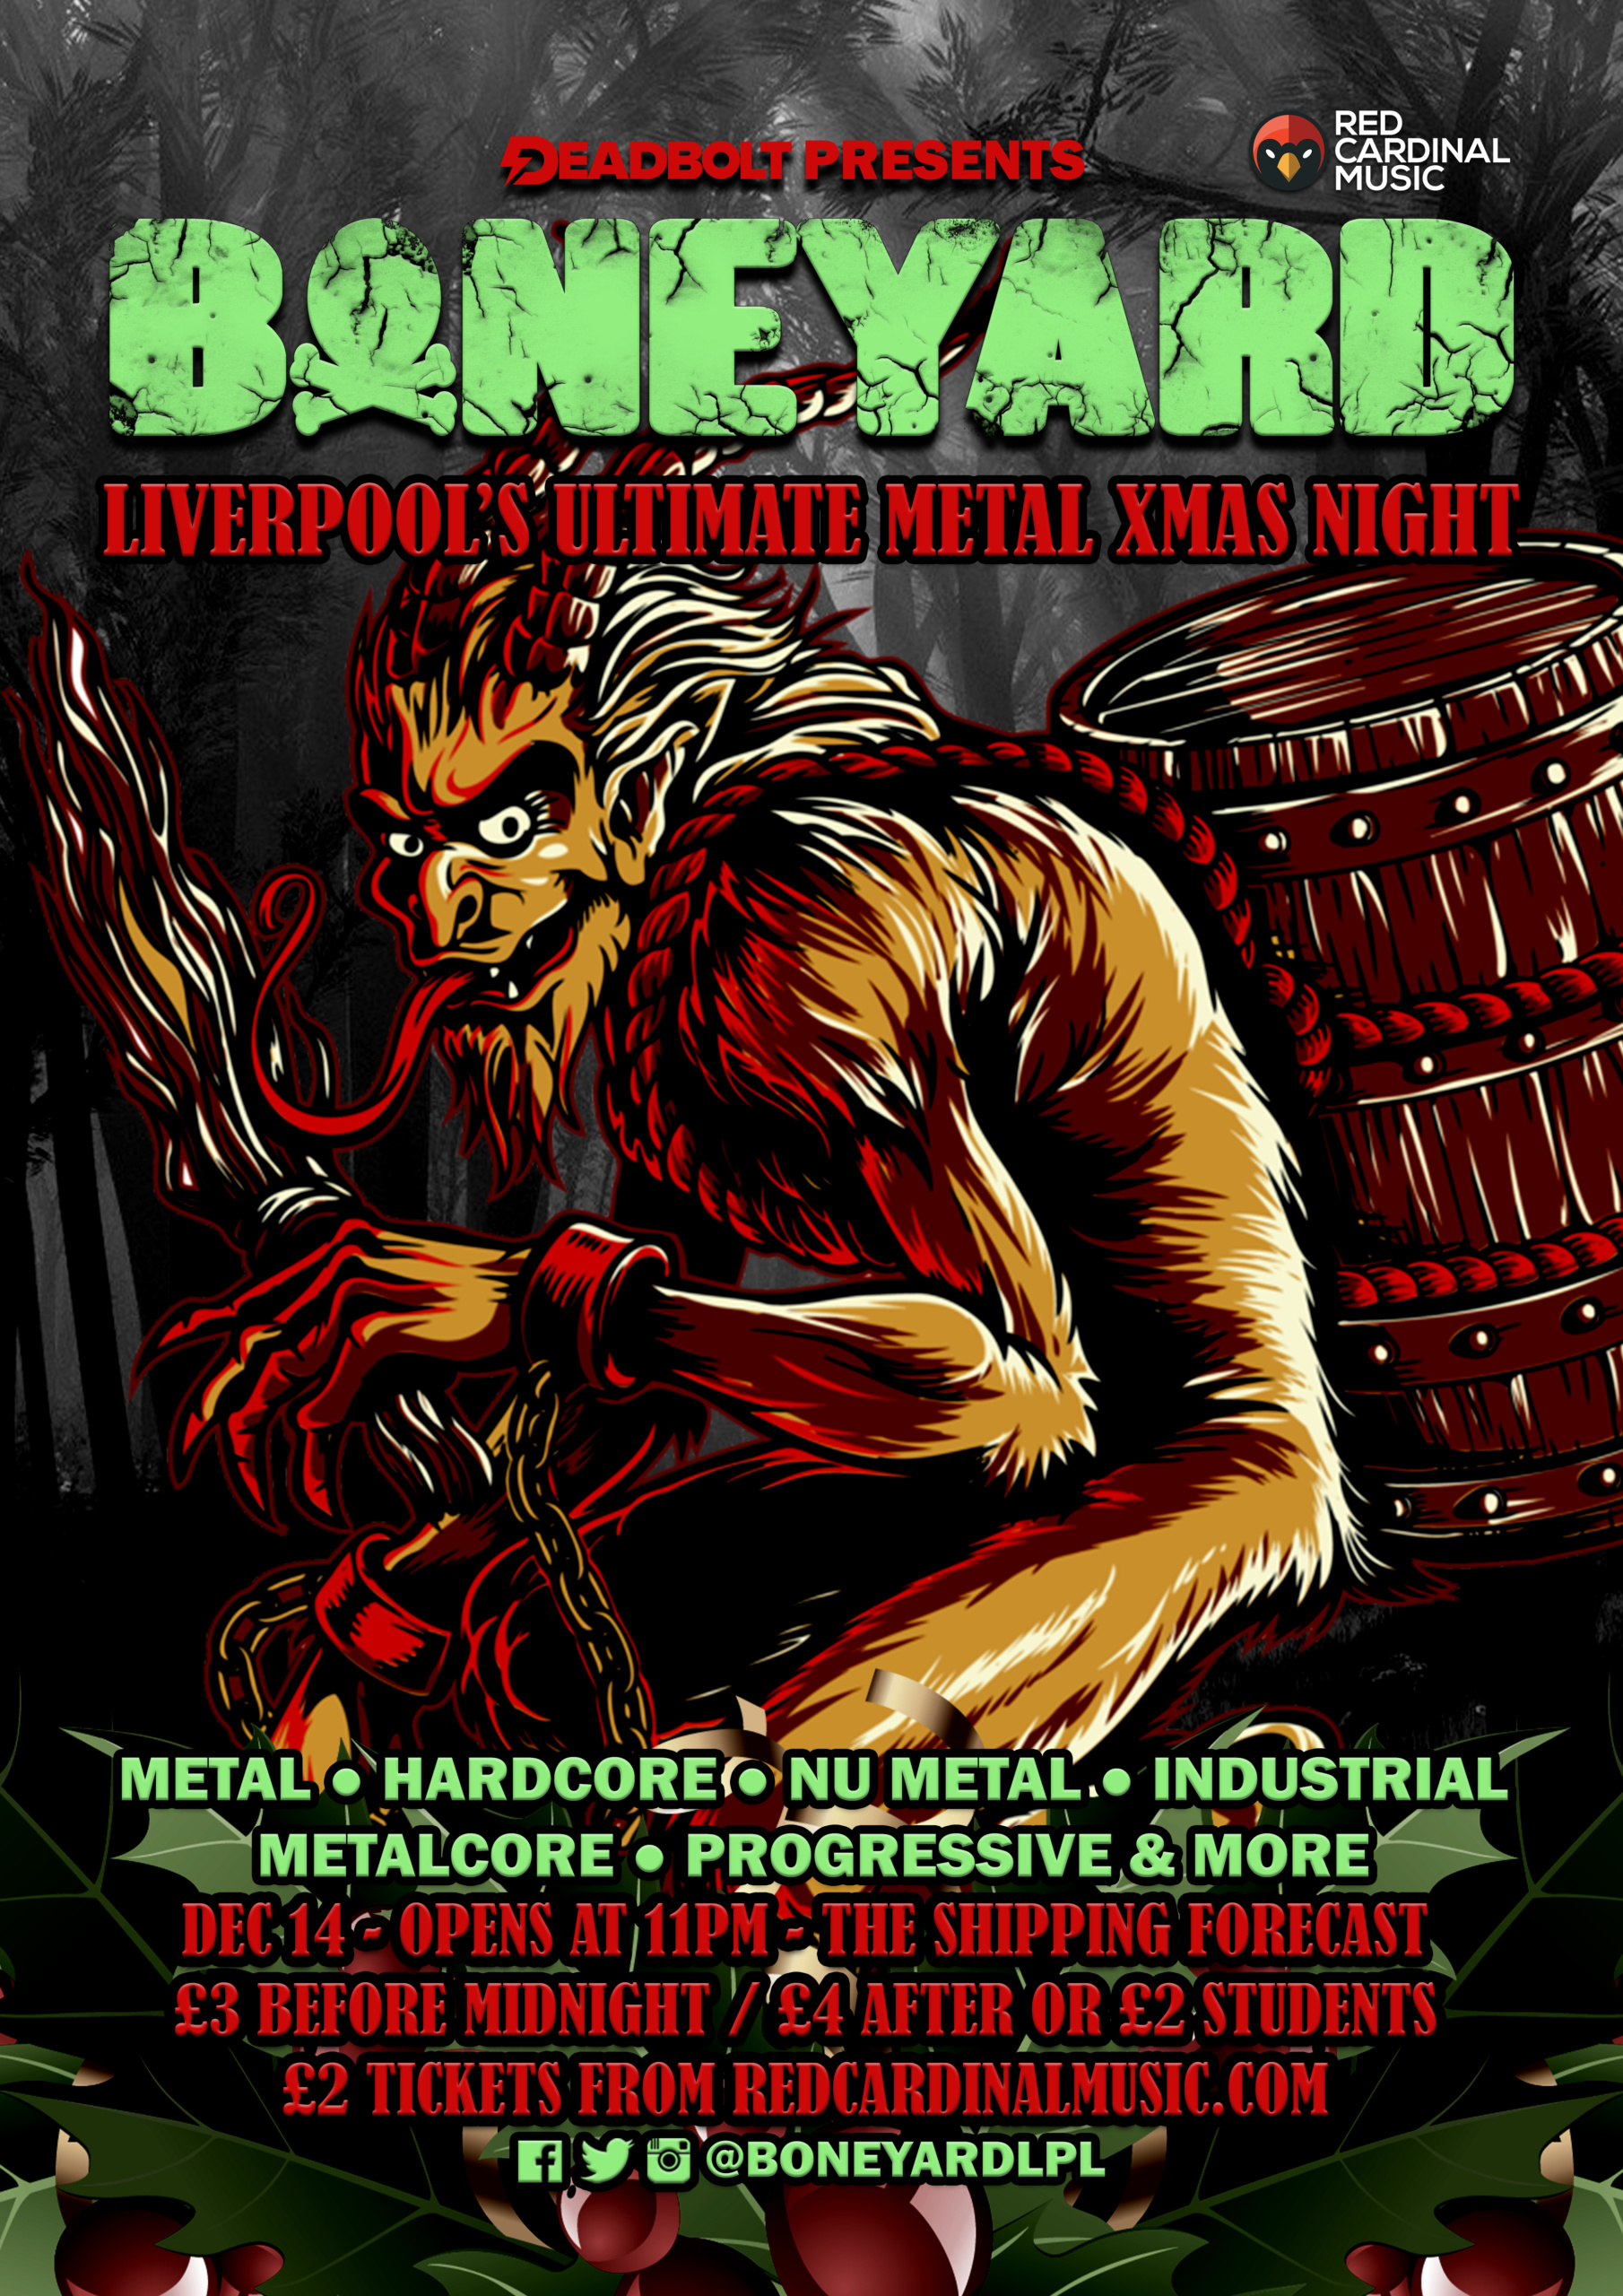 Boneyard Christmas Metal Night - Shipping Forecast Liverpool - Dec 19 - Poster - Red Cardinal Music